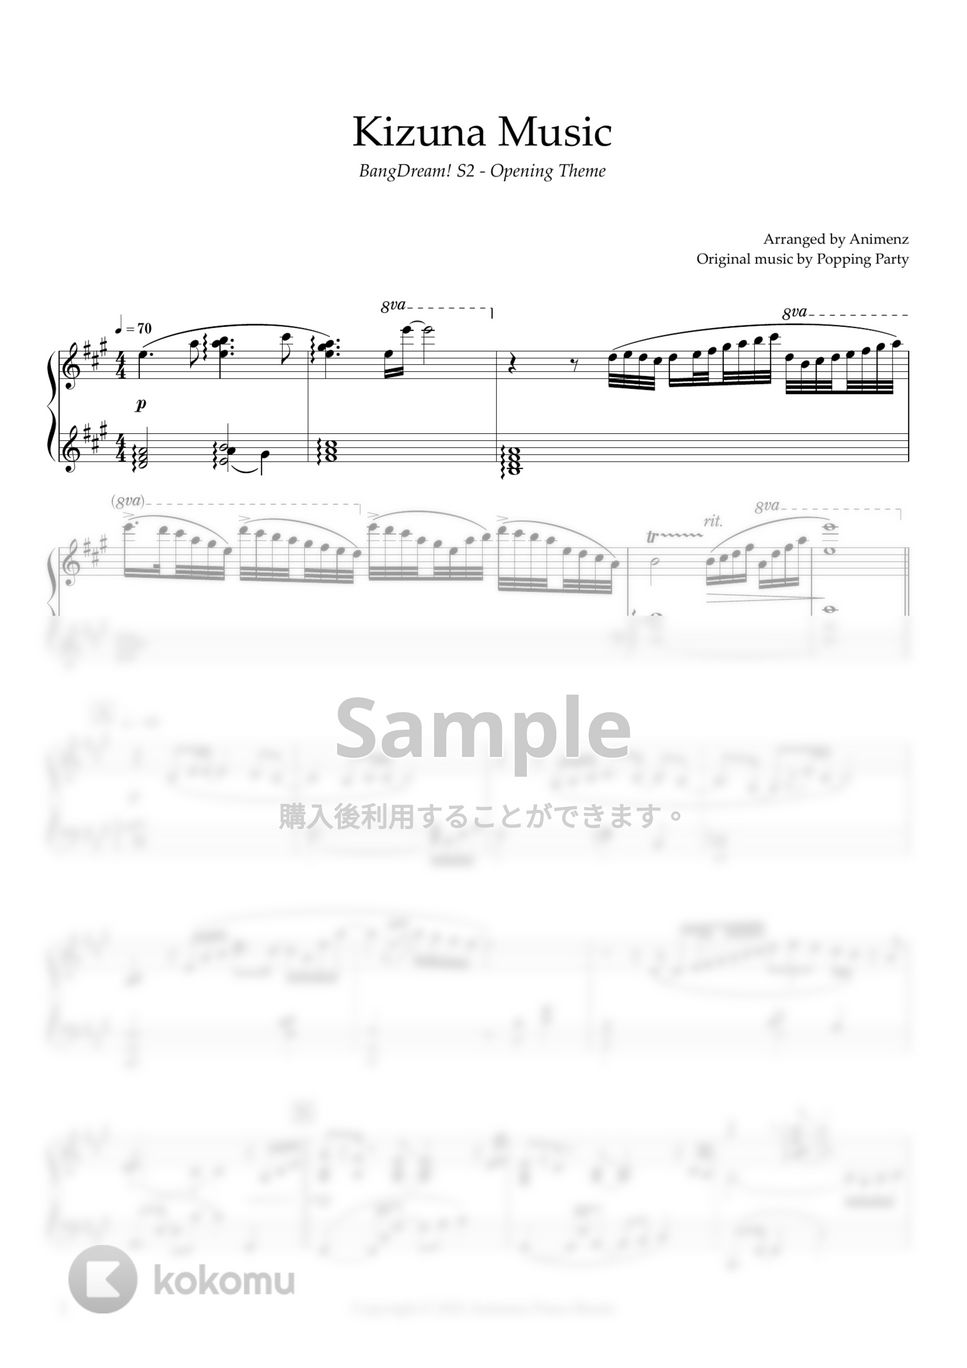 Poppin'Party - キズナミュージック♪ (BanG Dream! 2nd Season) by Animenz